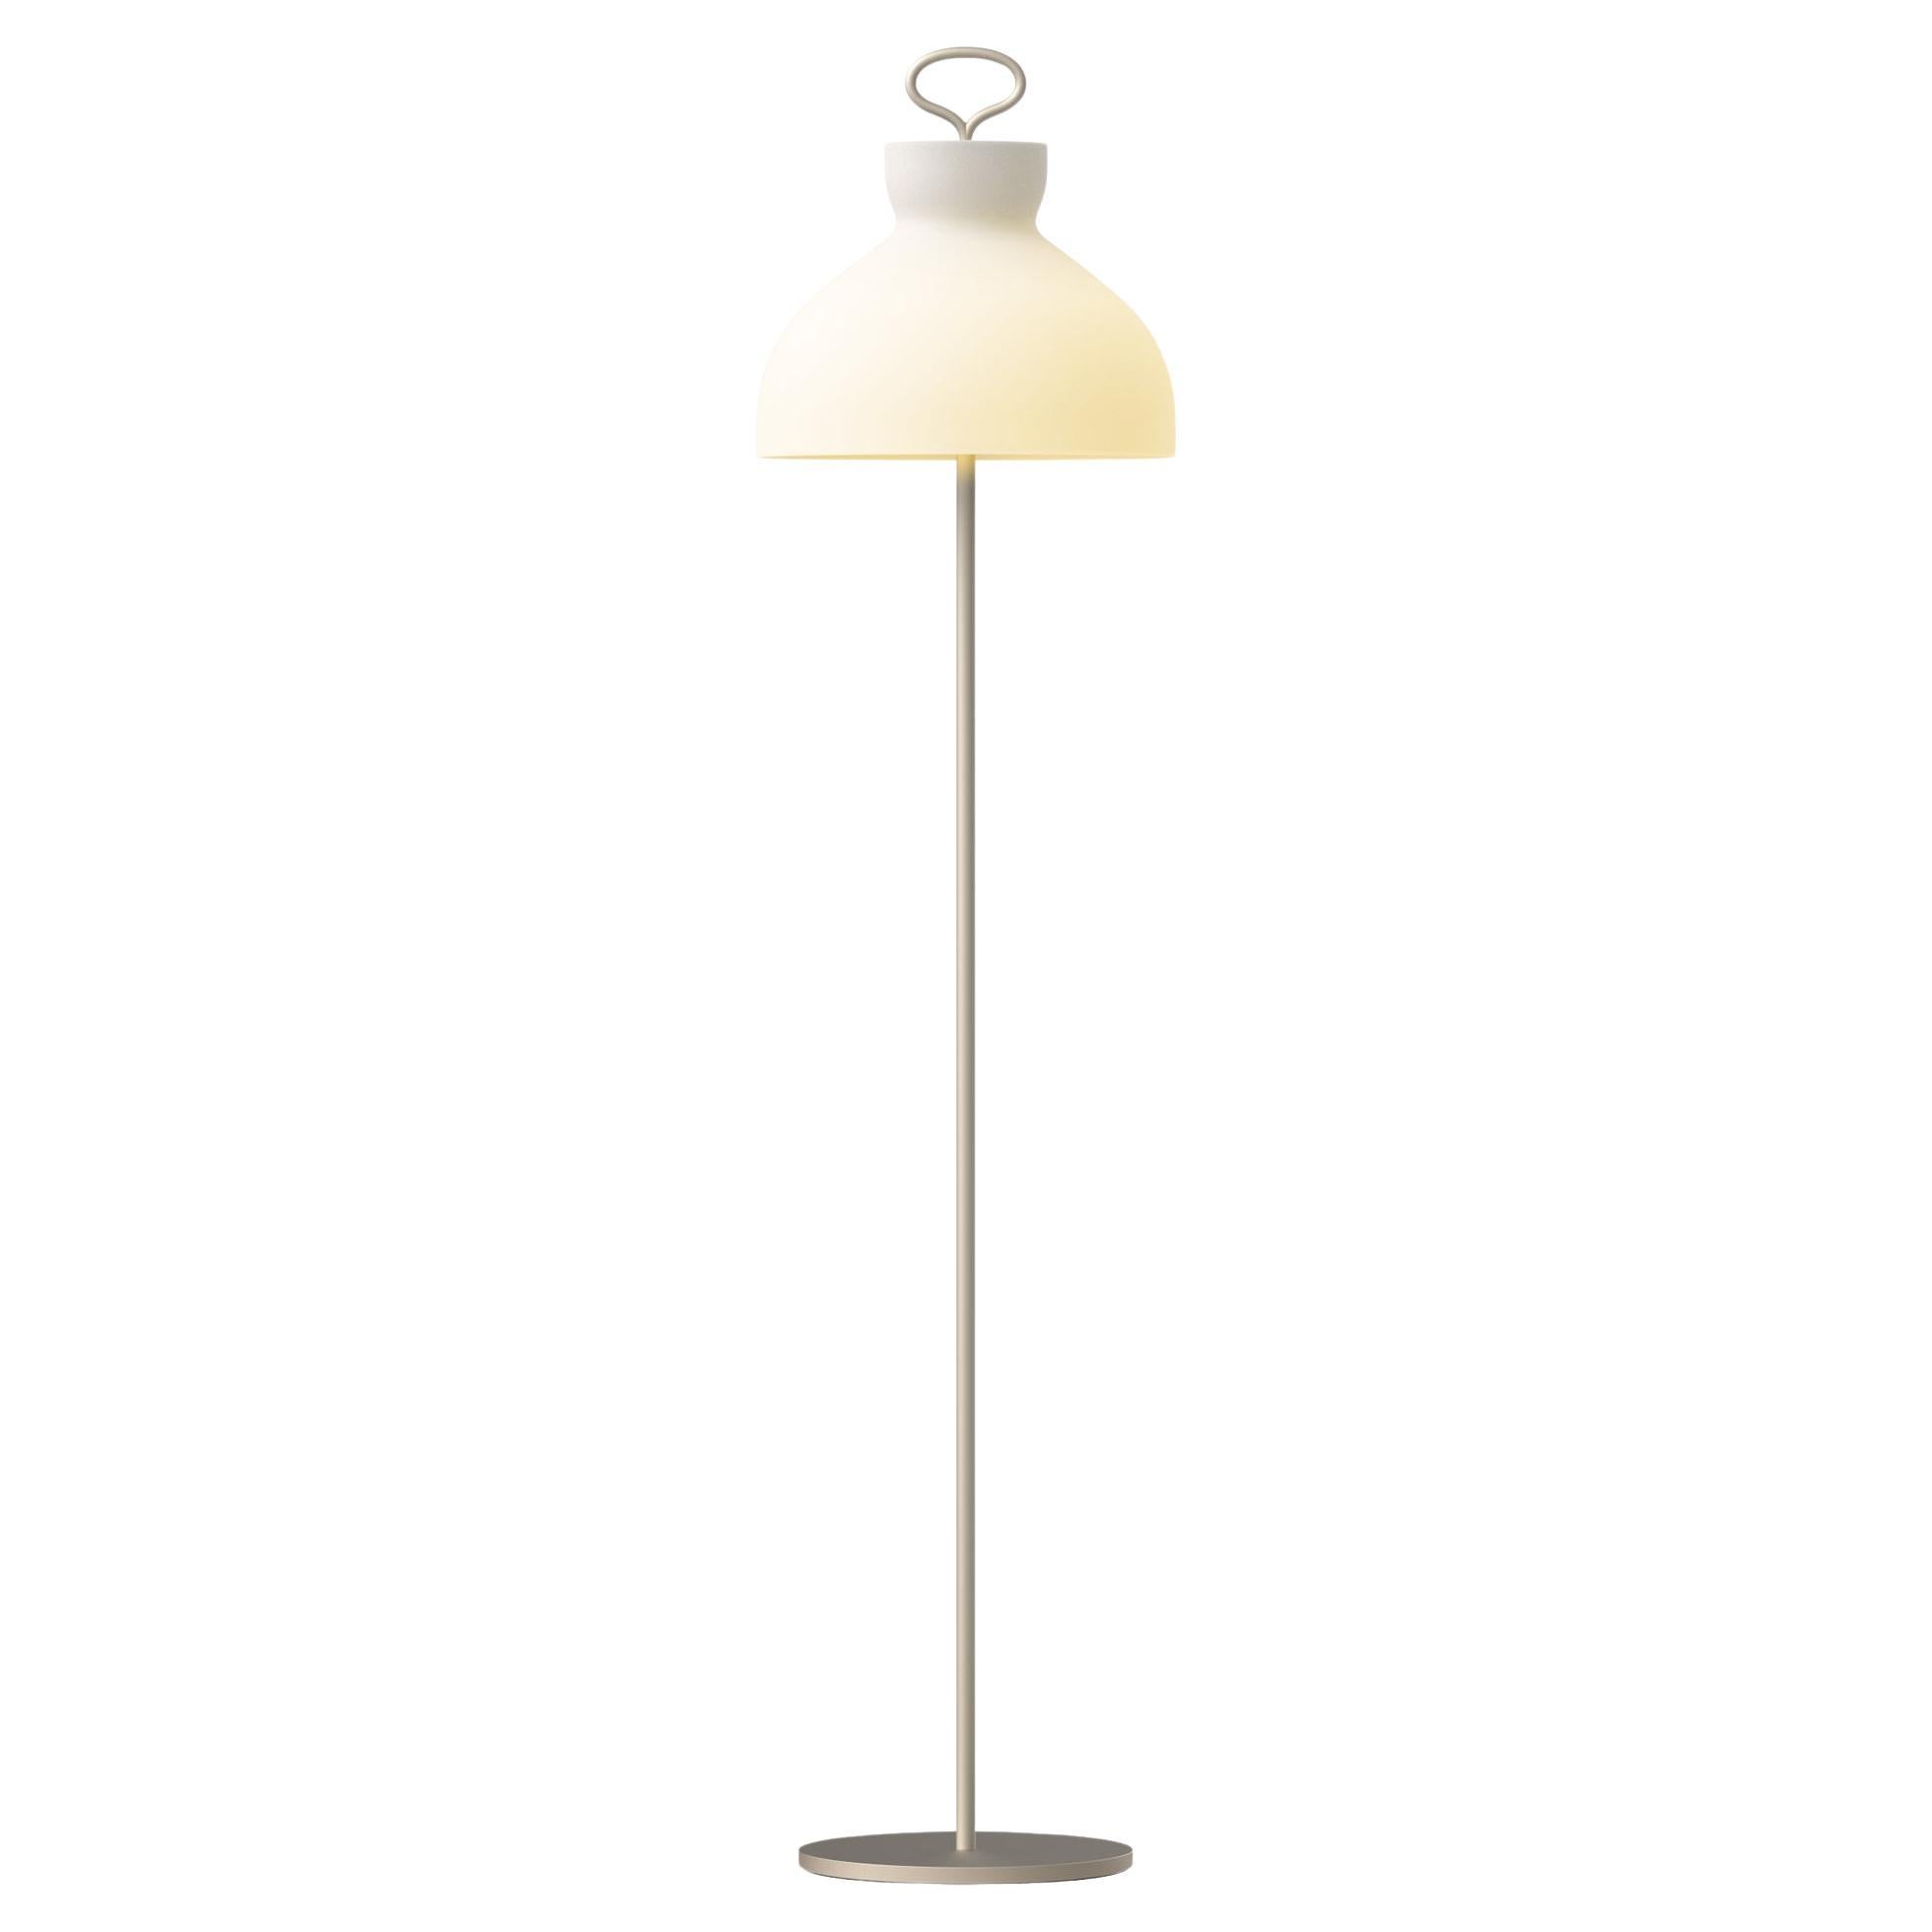 Ignazio Gardella 'Arenzano Terra' Floor Lamp in Satin Nickel and Glass